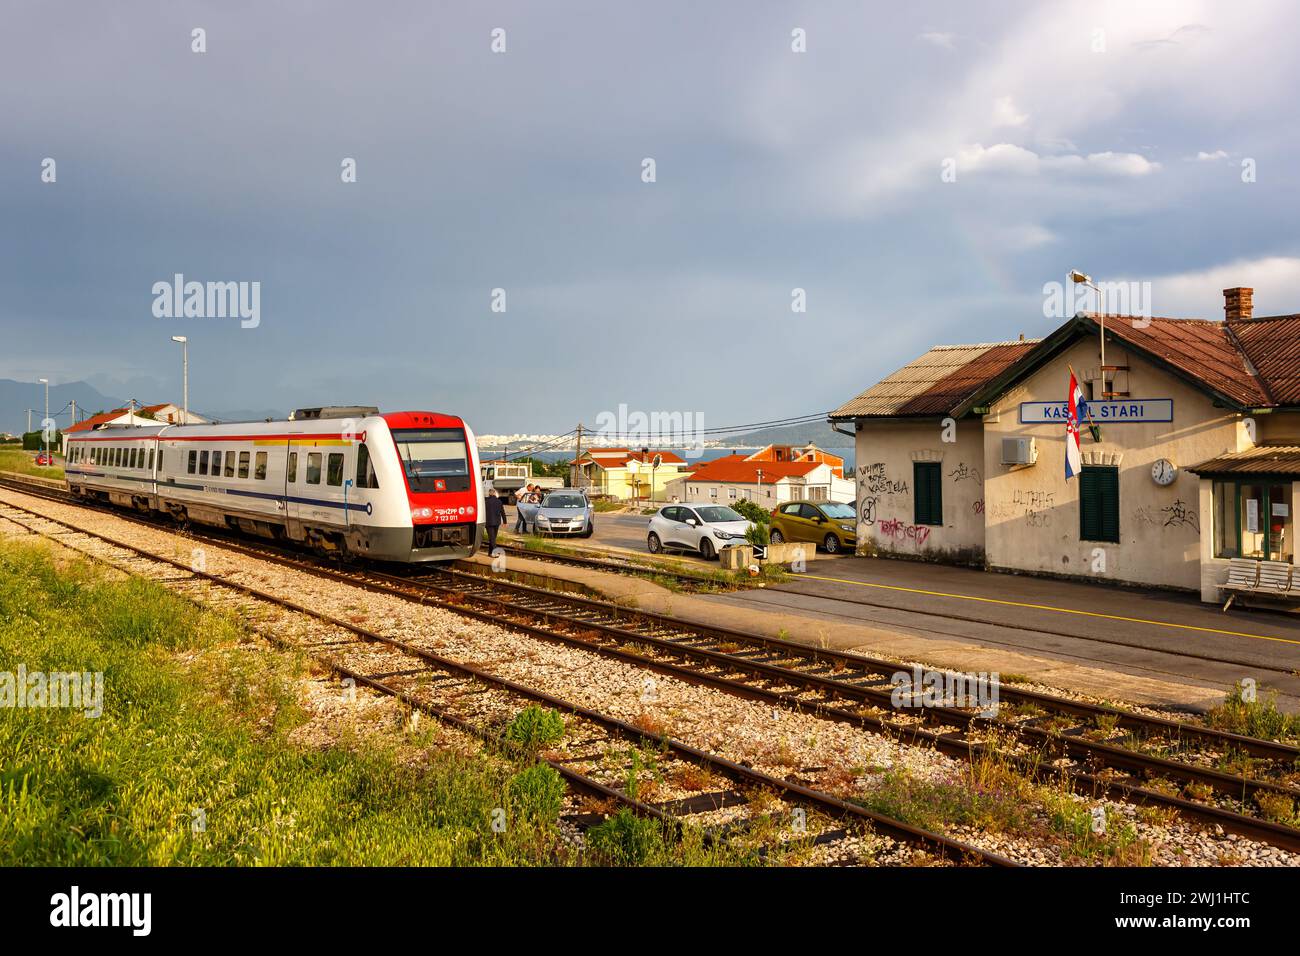 Lokalzug mit Kipptechnik der kroatischen Eisenbahn Hrvatske Zeljeznice am Bahnhof KaÅ¡tel Stari, Kroatien Stockfoto